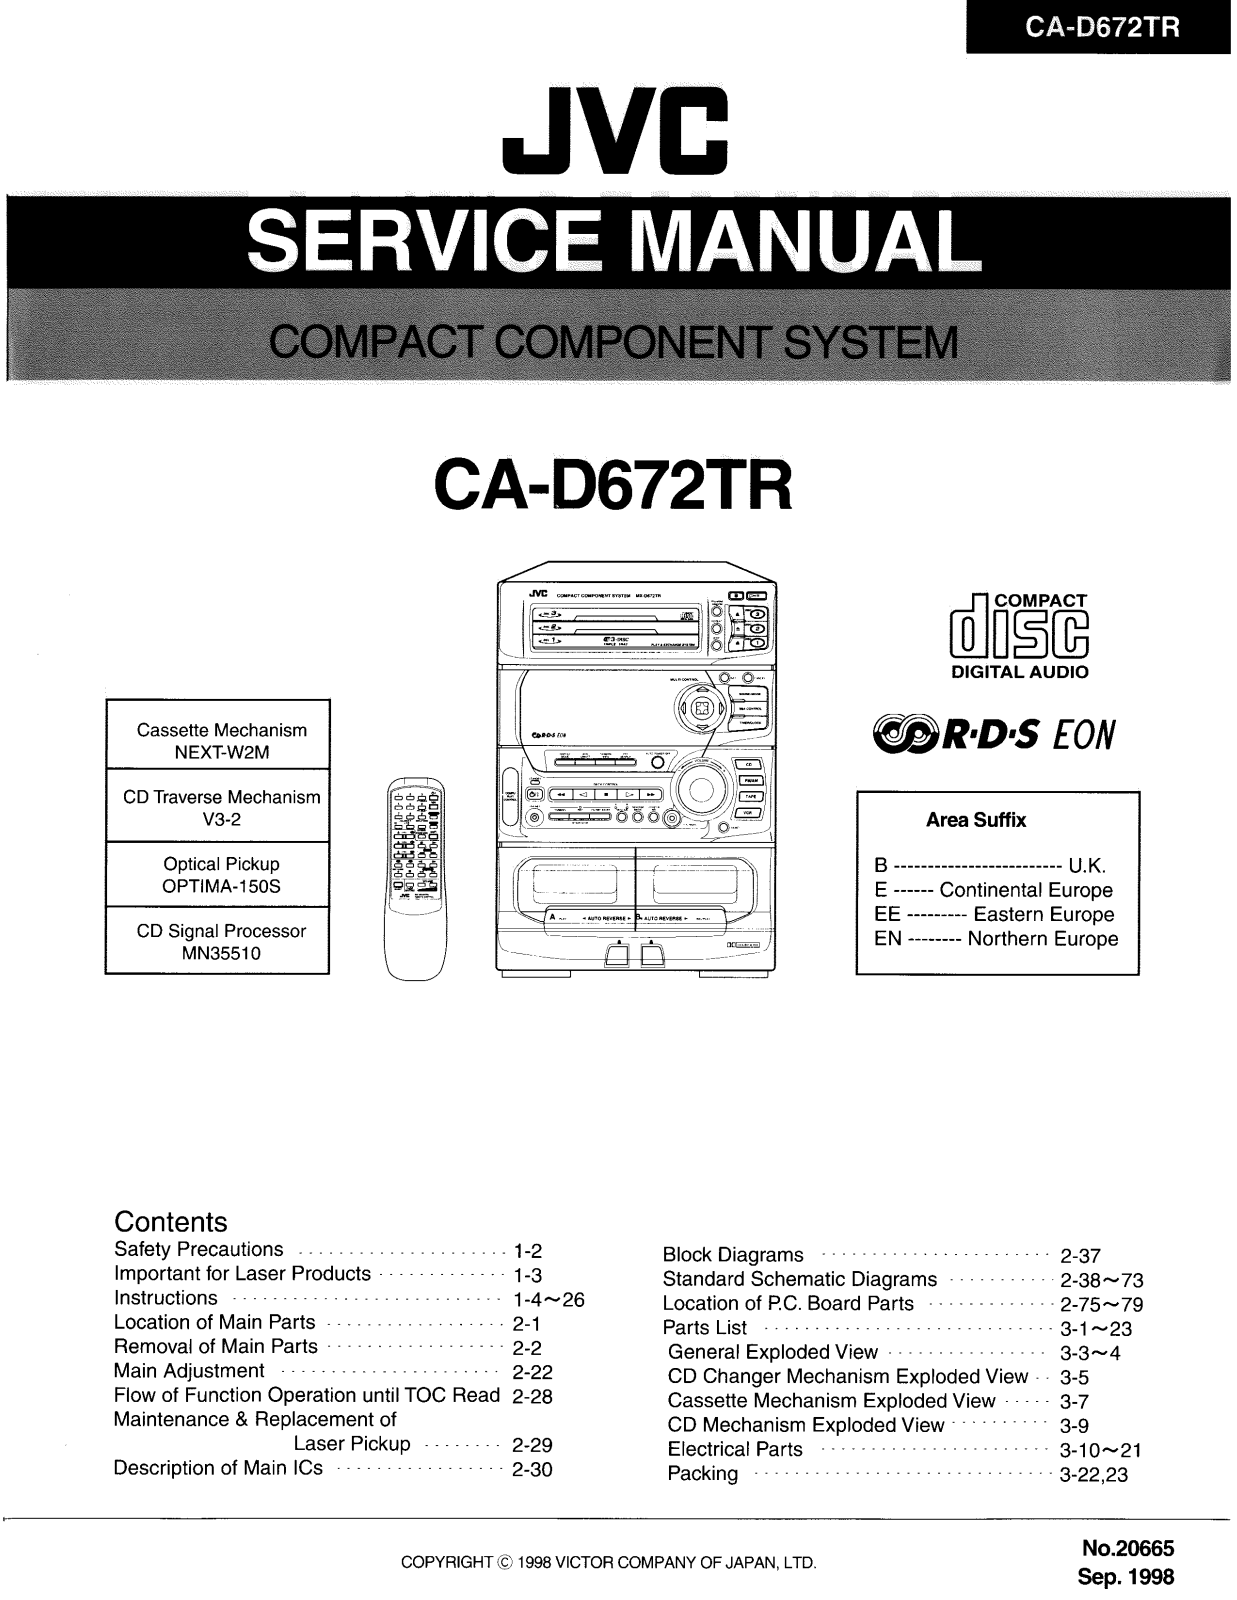 JVC CA-D672TRB, CA-D672TRE, CA-D672TREE, CA-D672TREN Service Manual